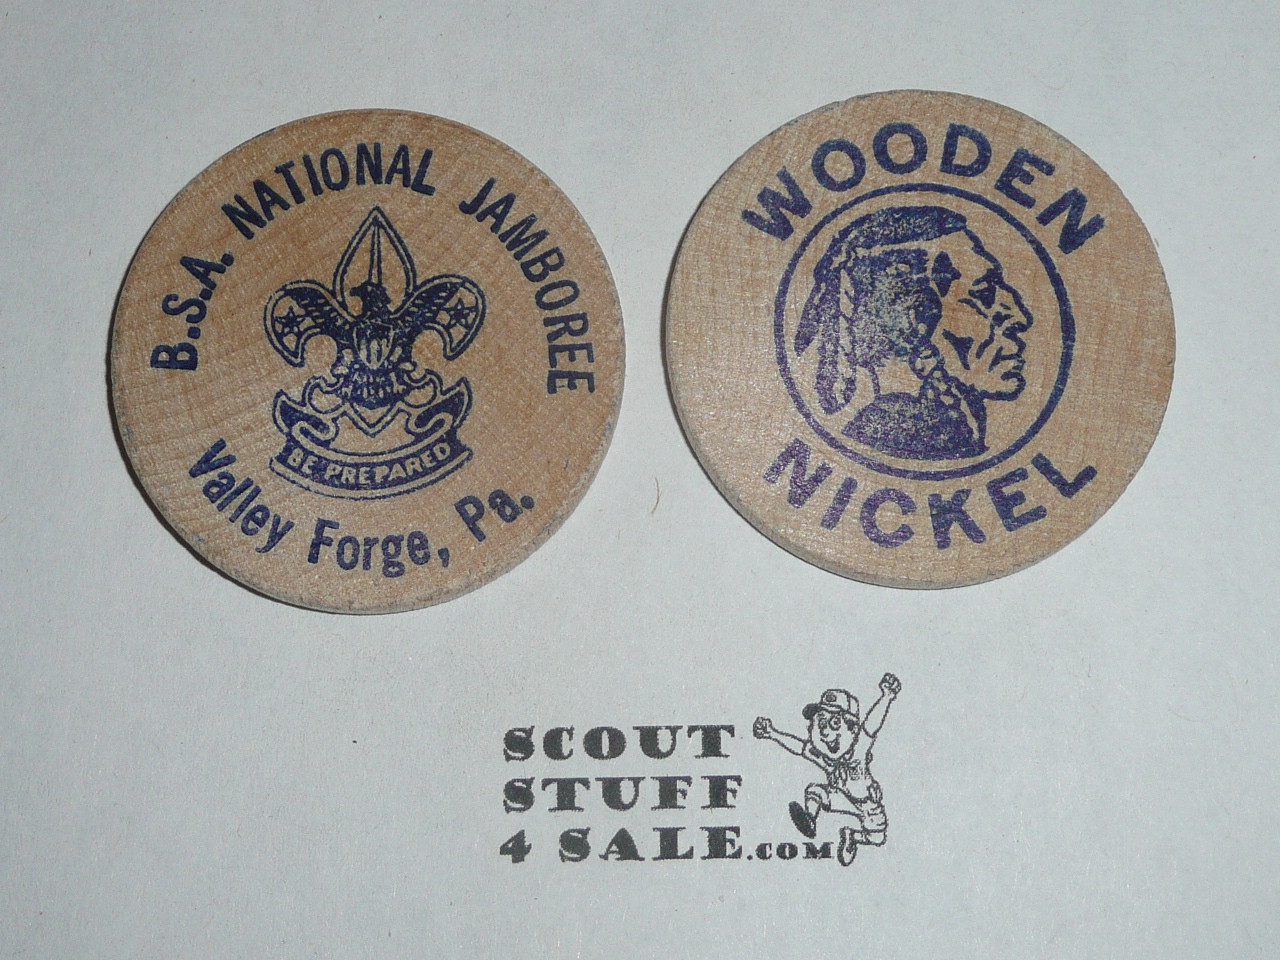 1957 National Jamboree Boy Scout Wooden Nickel